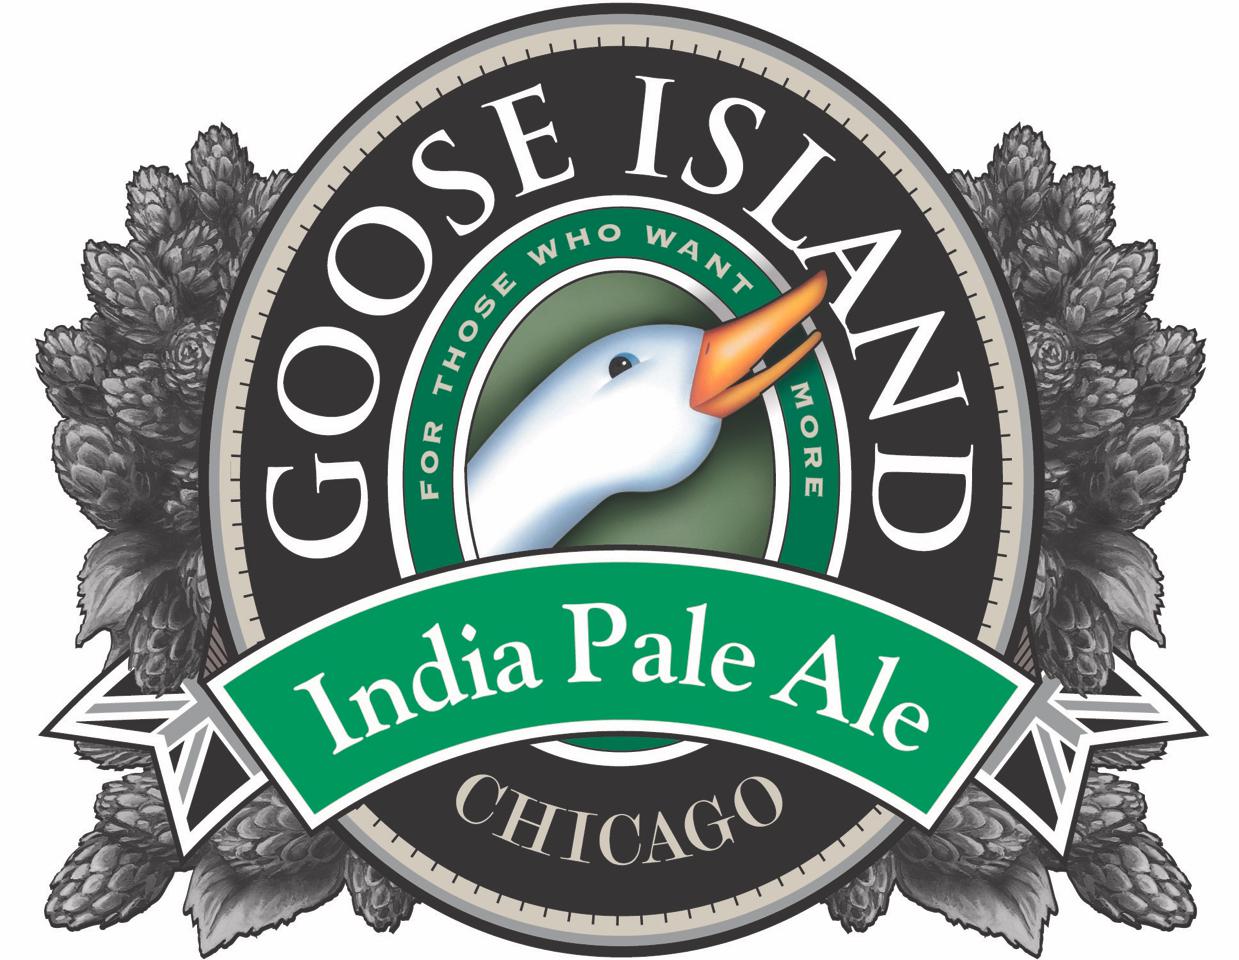 Goose Island IPA 12 Packs product packaging